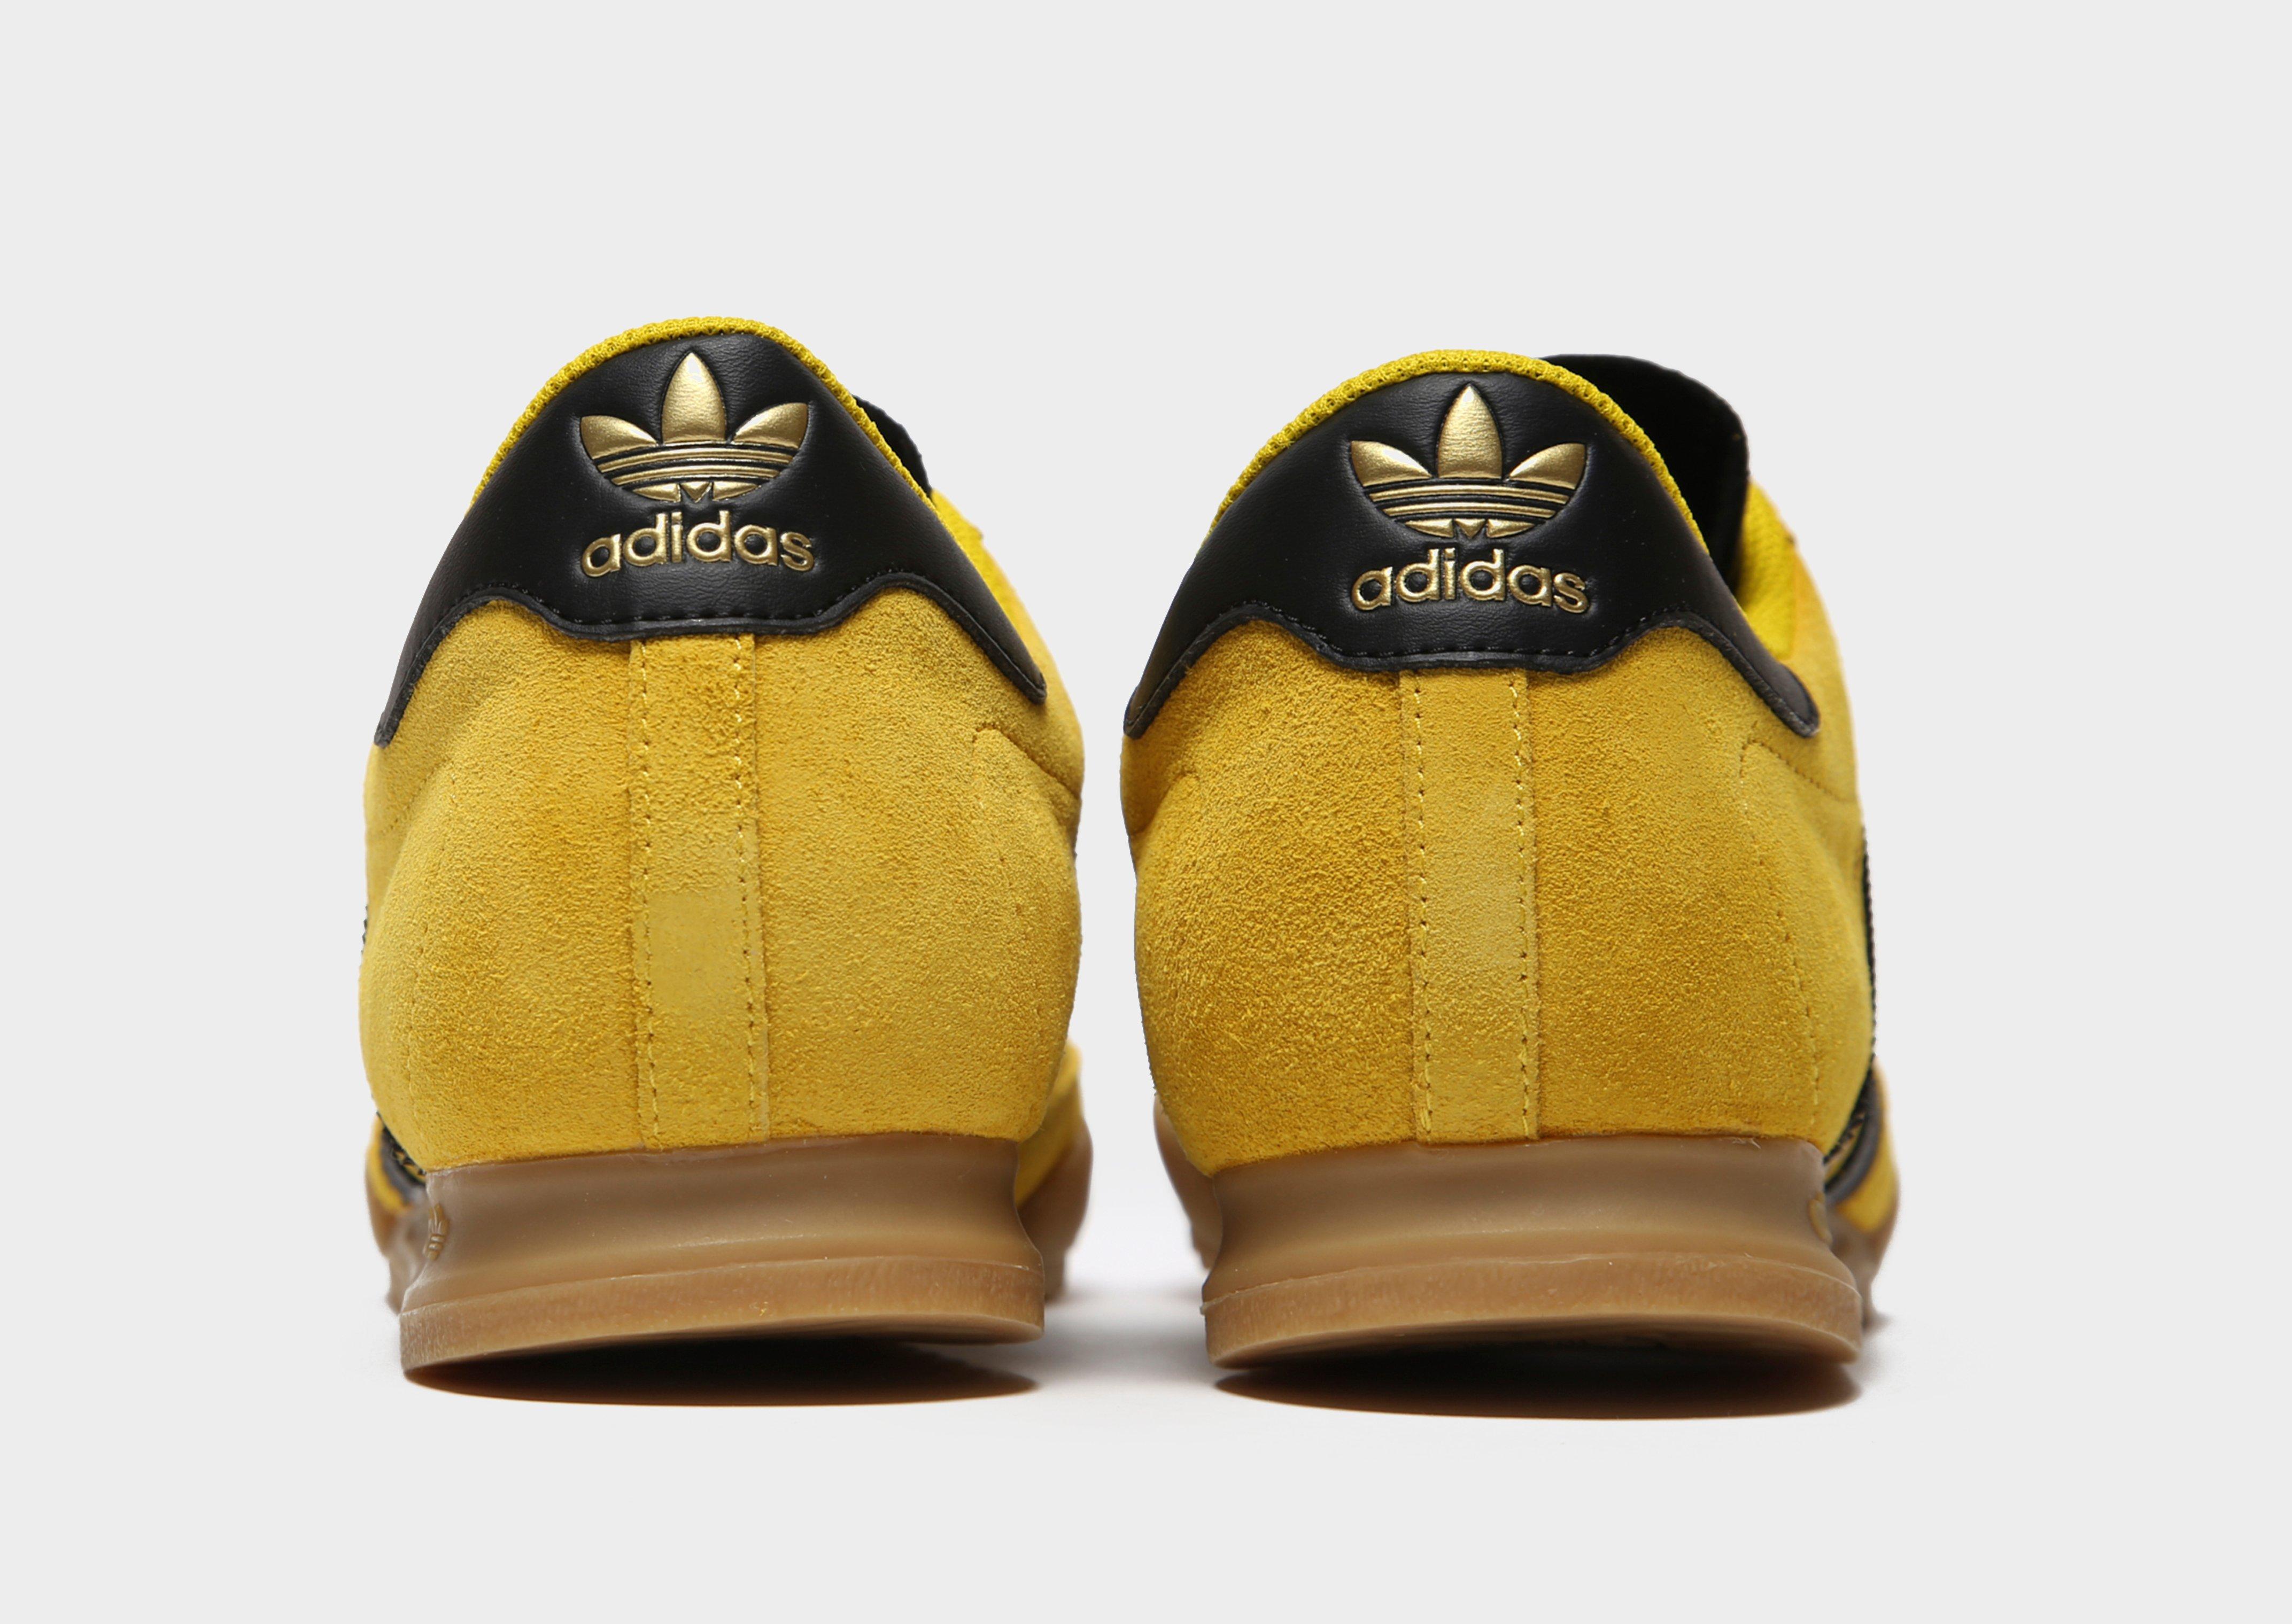 adidas beckenbauer yellow